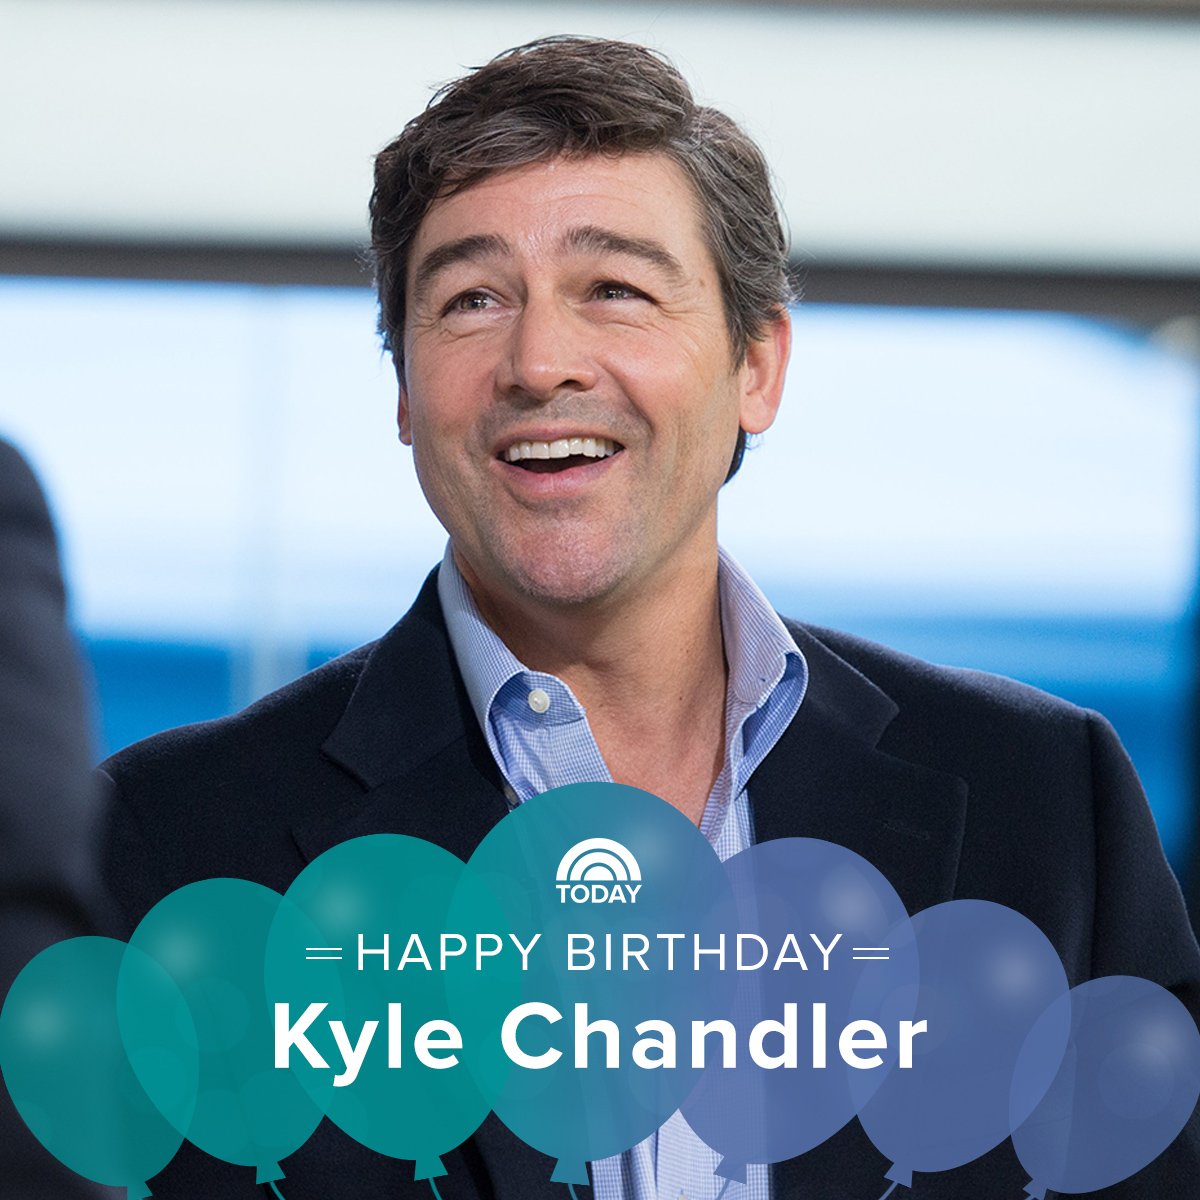 Happy birthday, Kyle Chandler!  